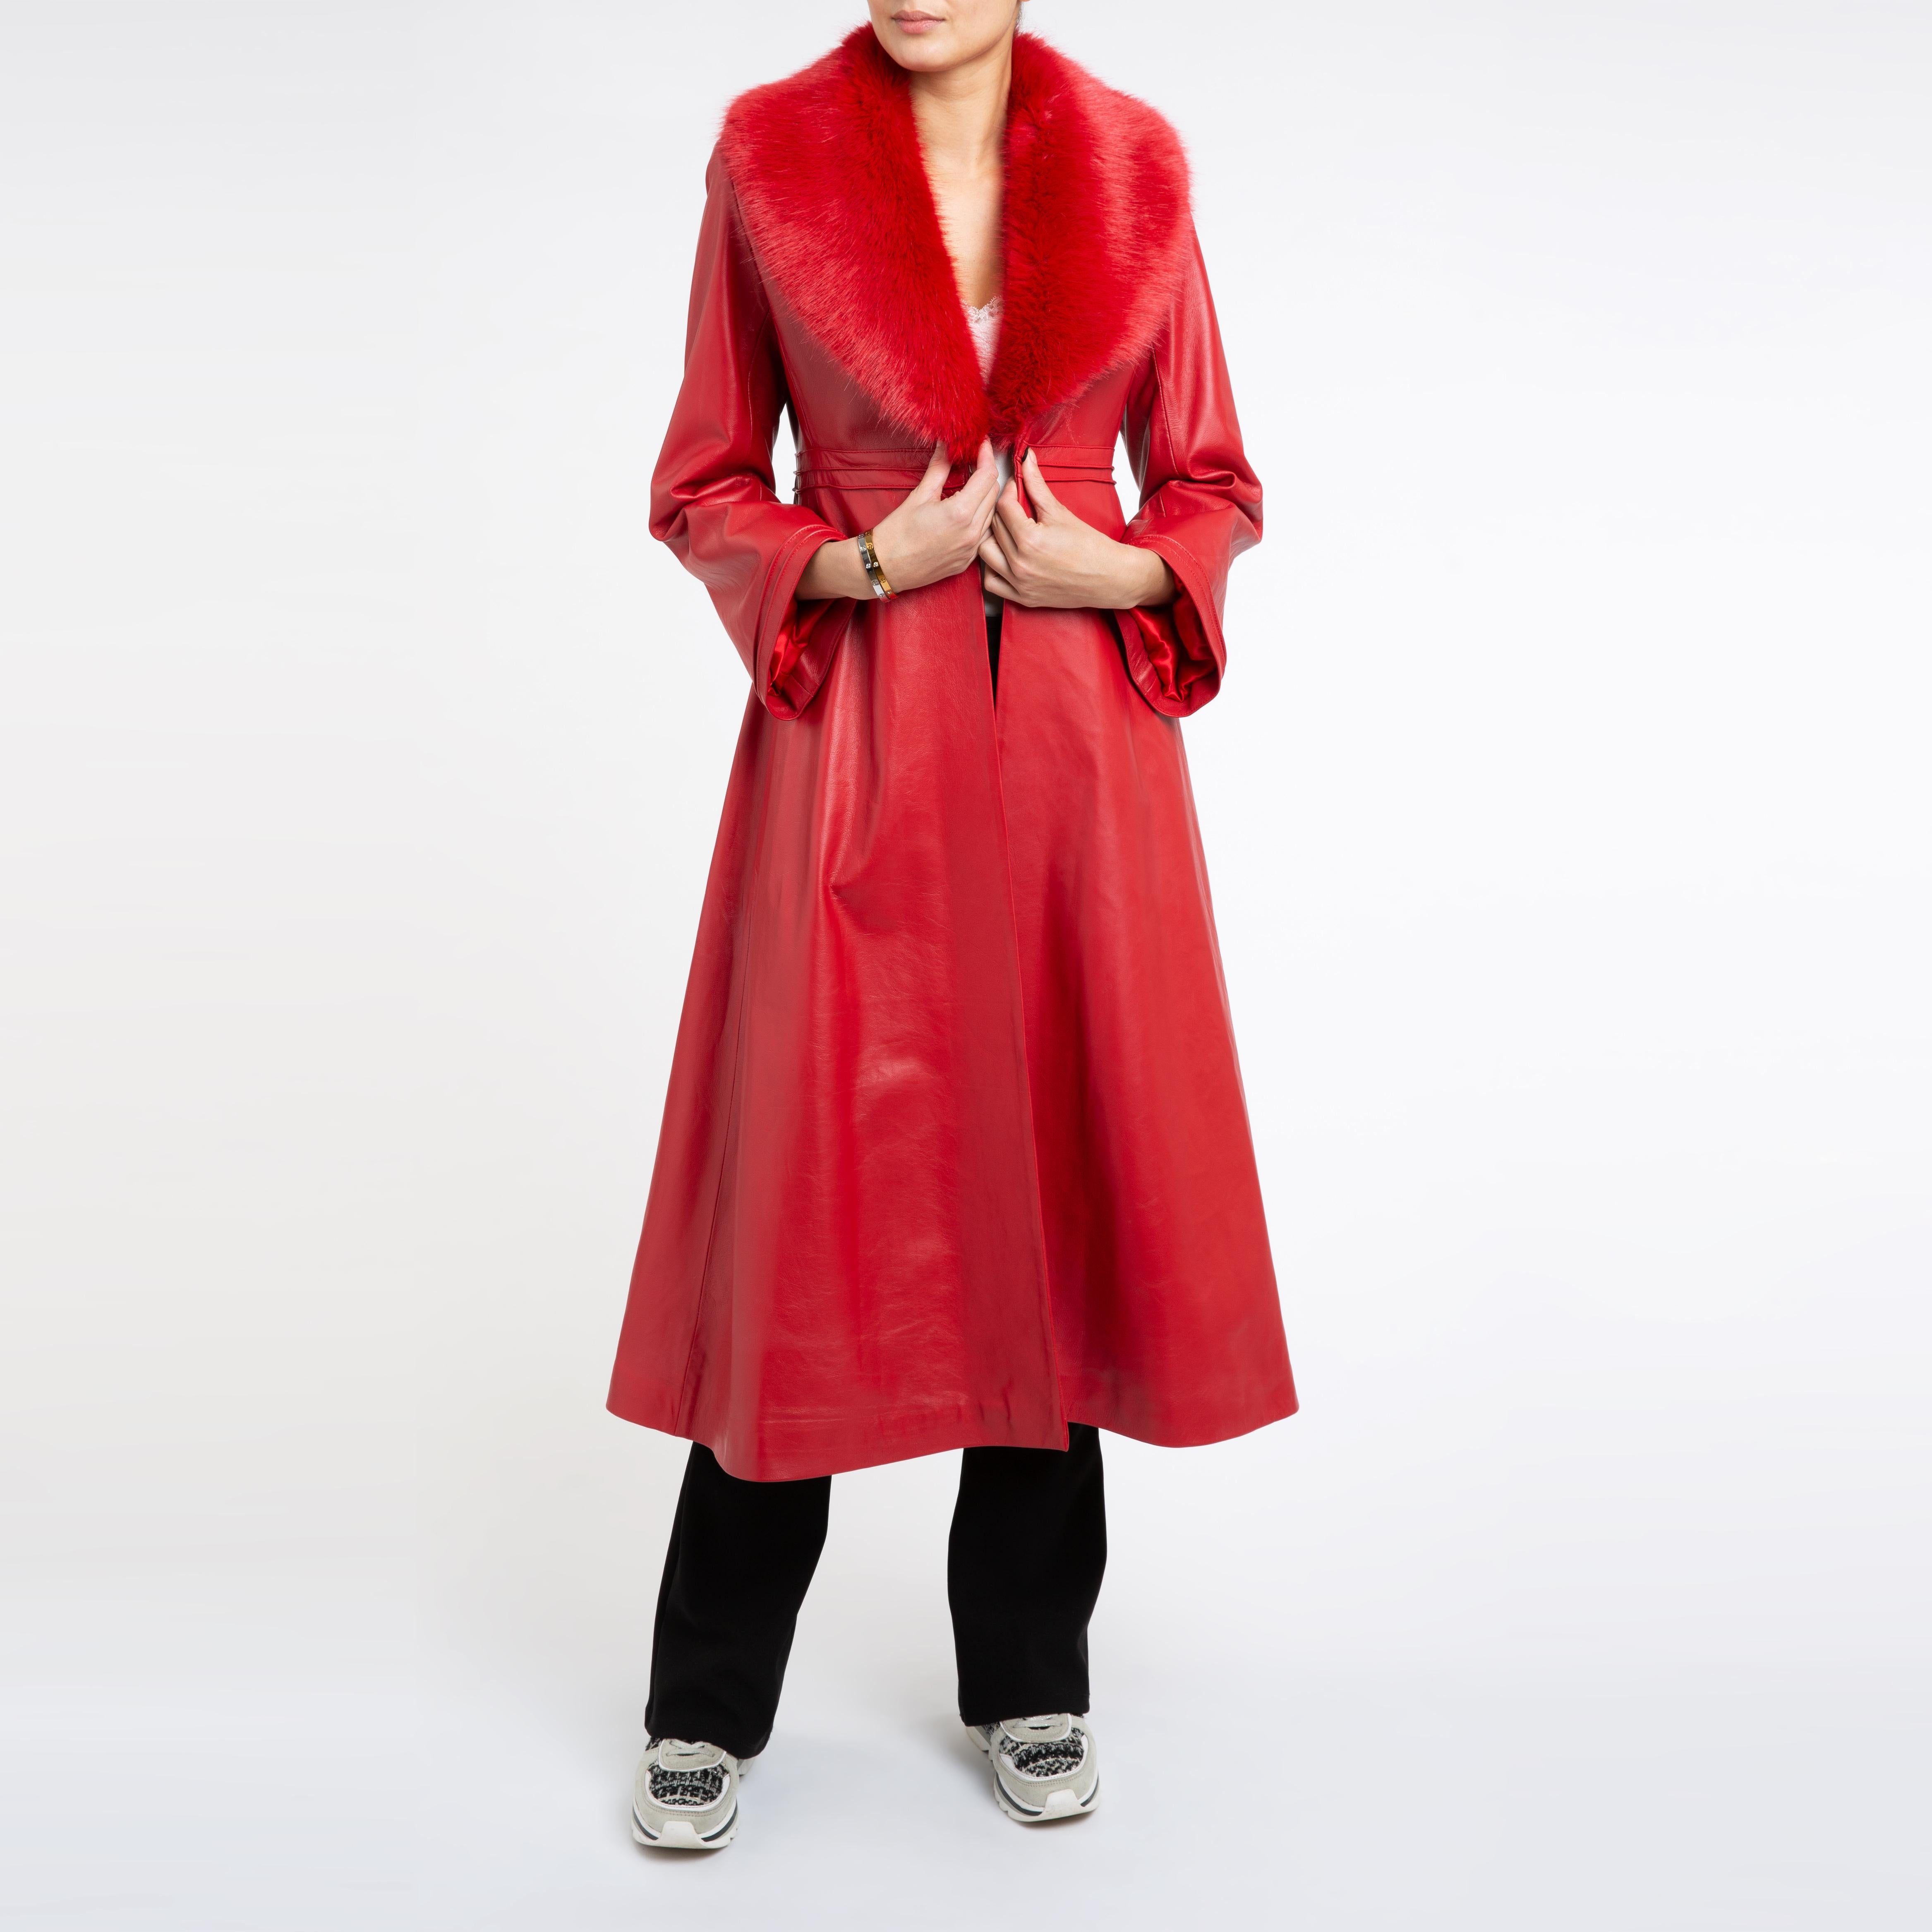 Women's Verheyen London Edward Leather Coat with Faux Fur Collar in Red - Size uk 14 For Sale